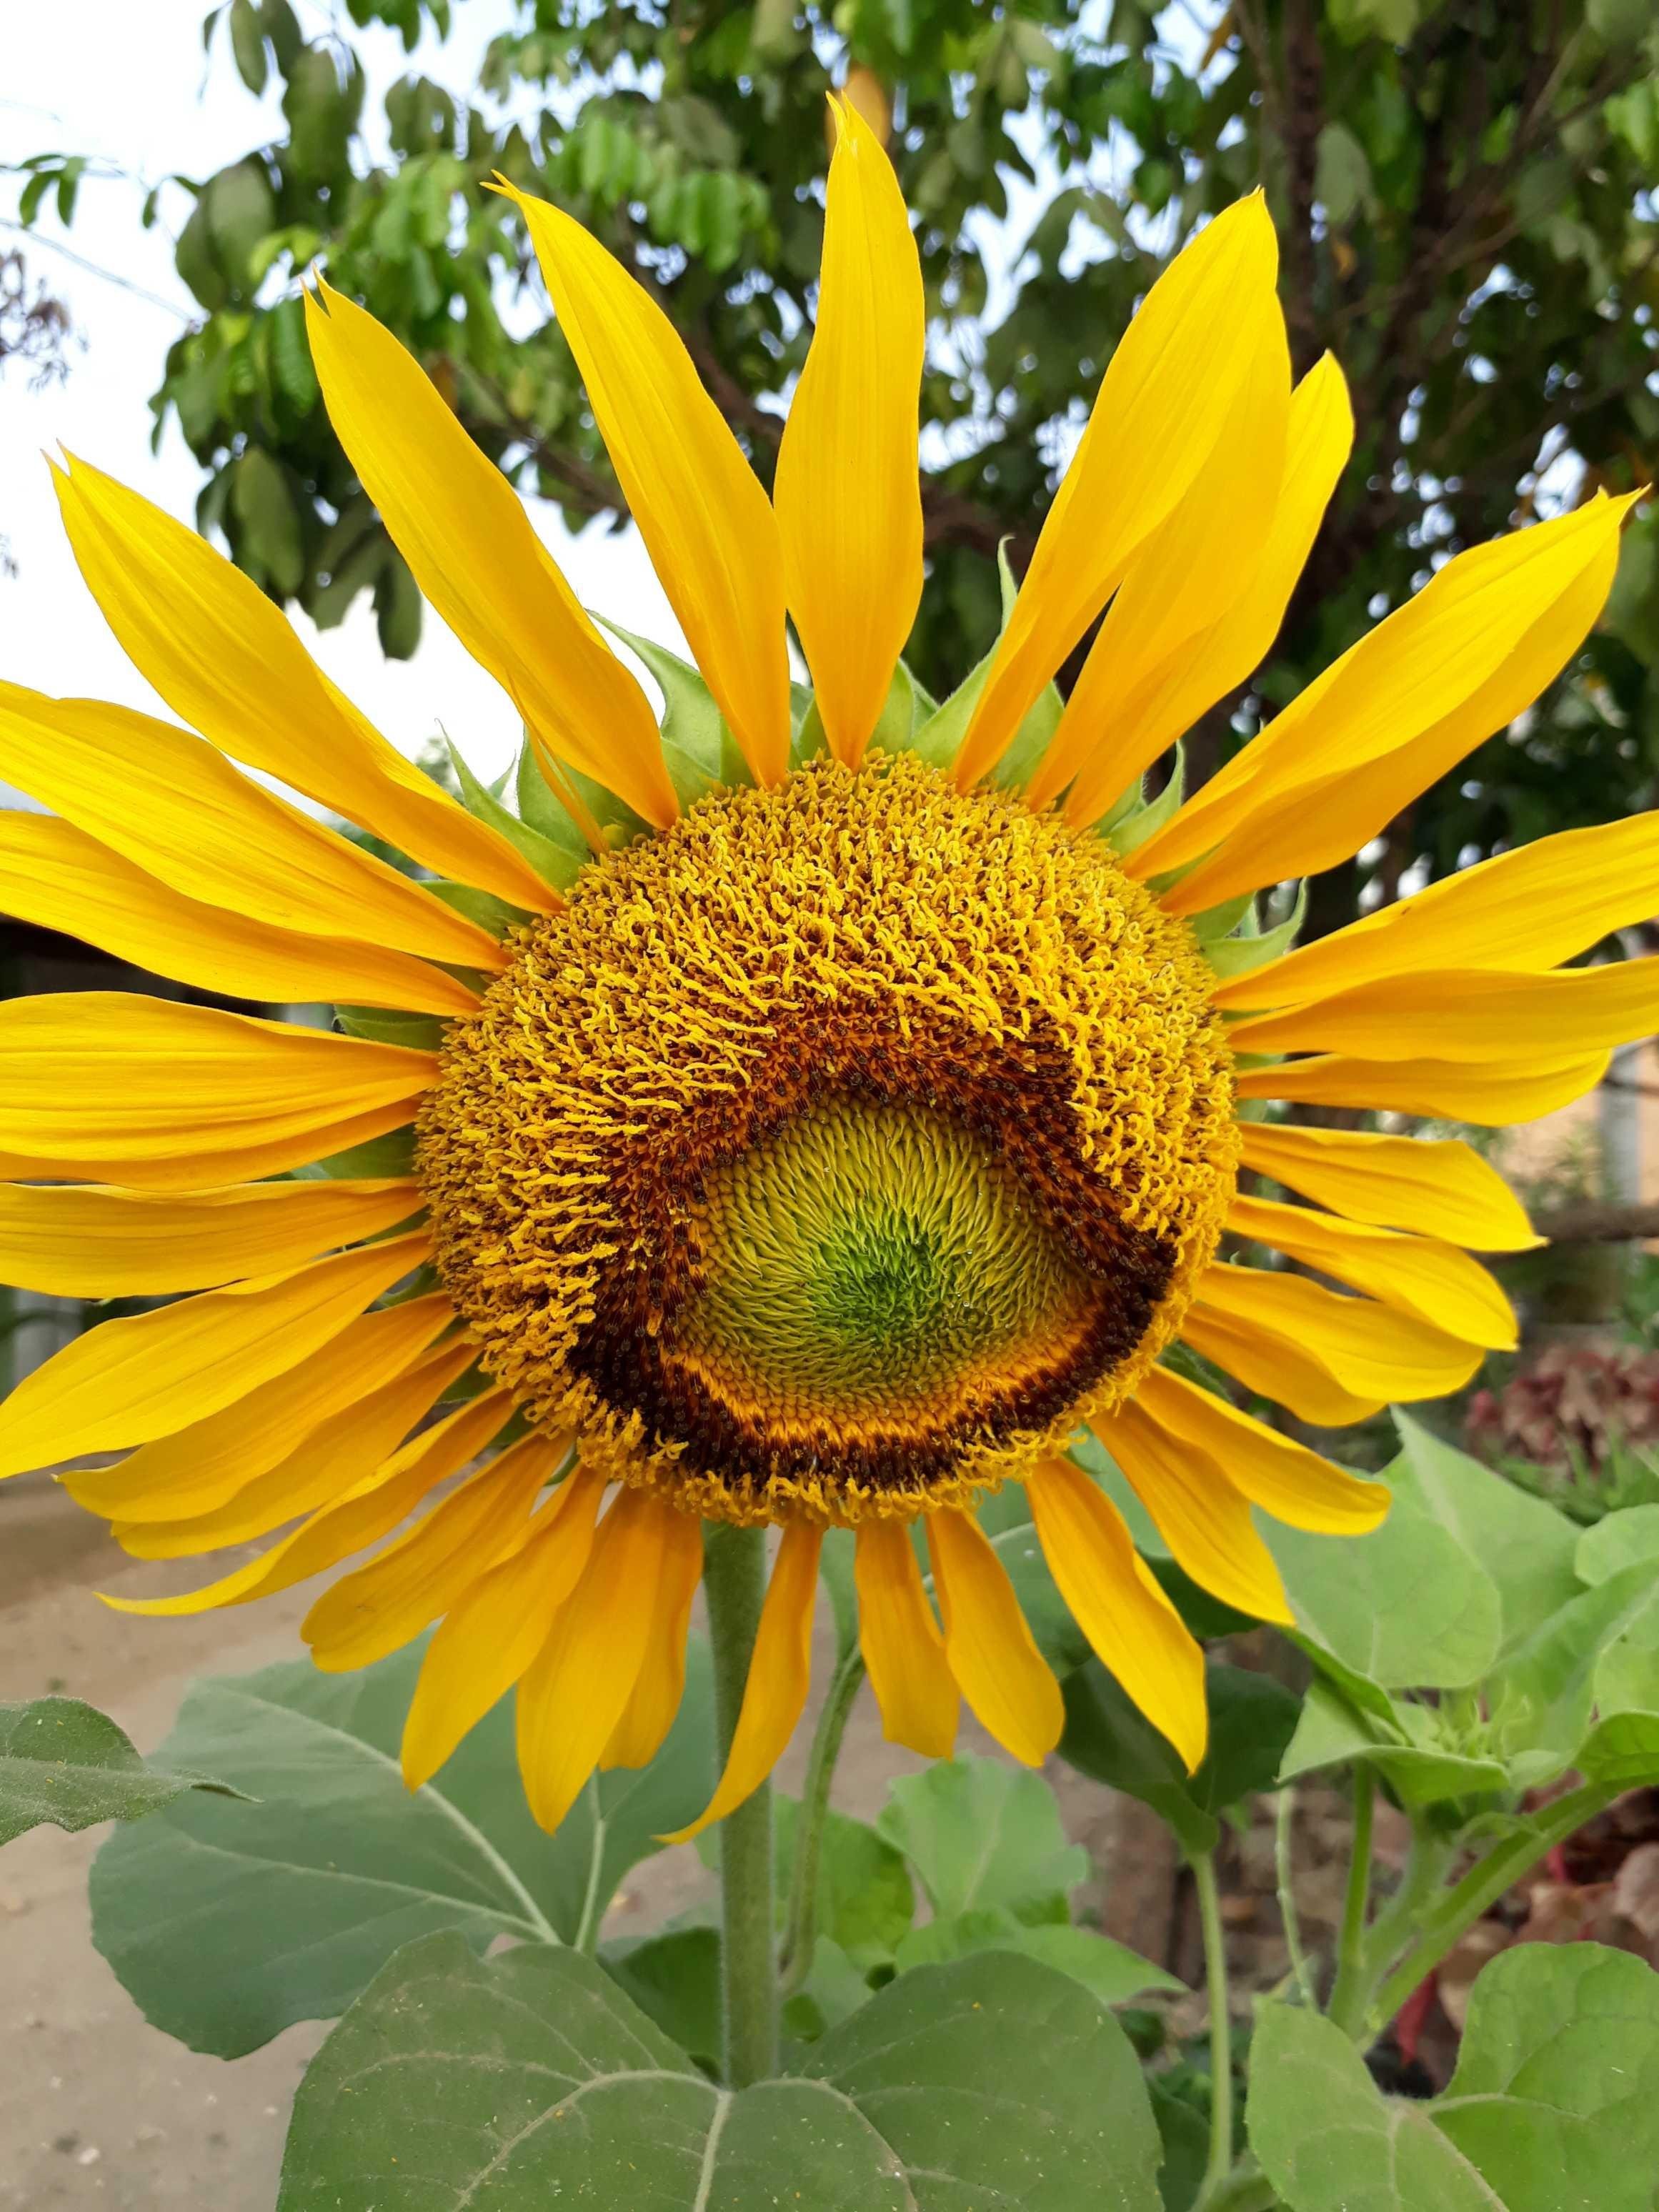 Fantastis 22+ Gambar Dan Filosofi Bunga Matahari - Gambar Bunga Indah